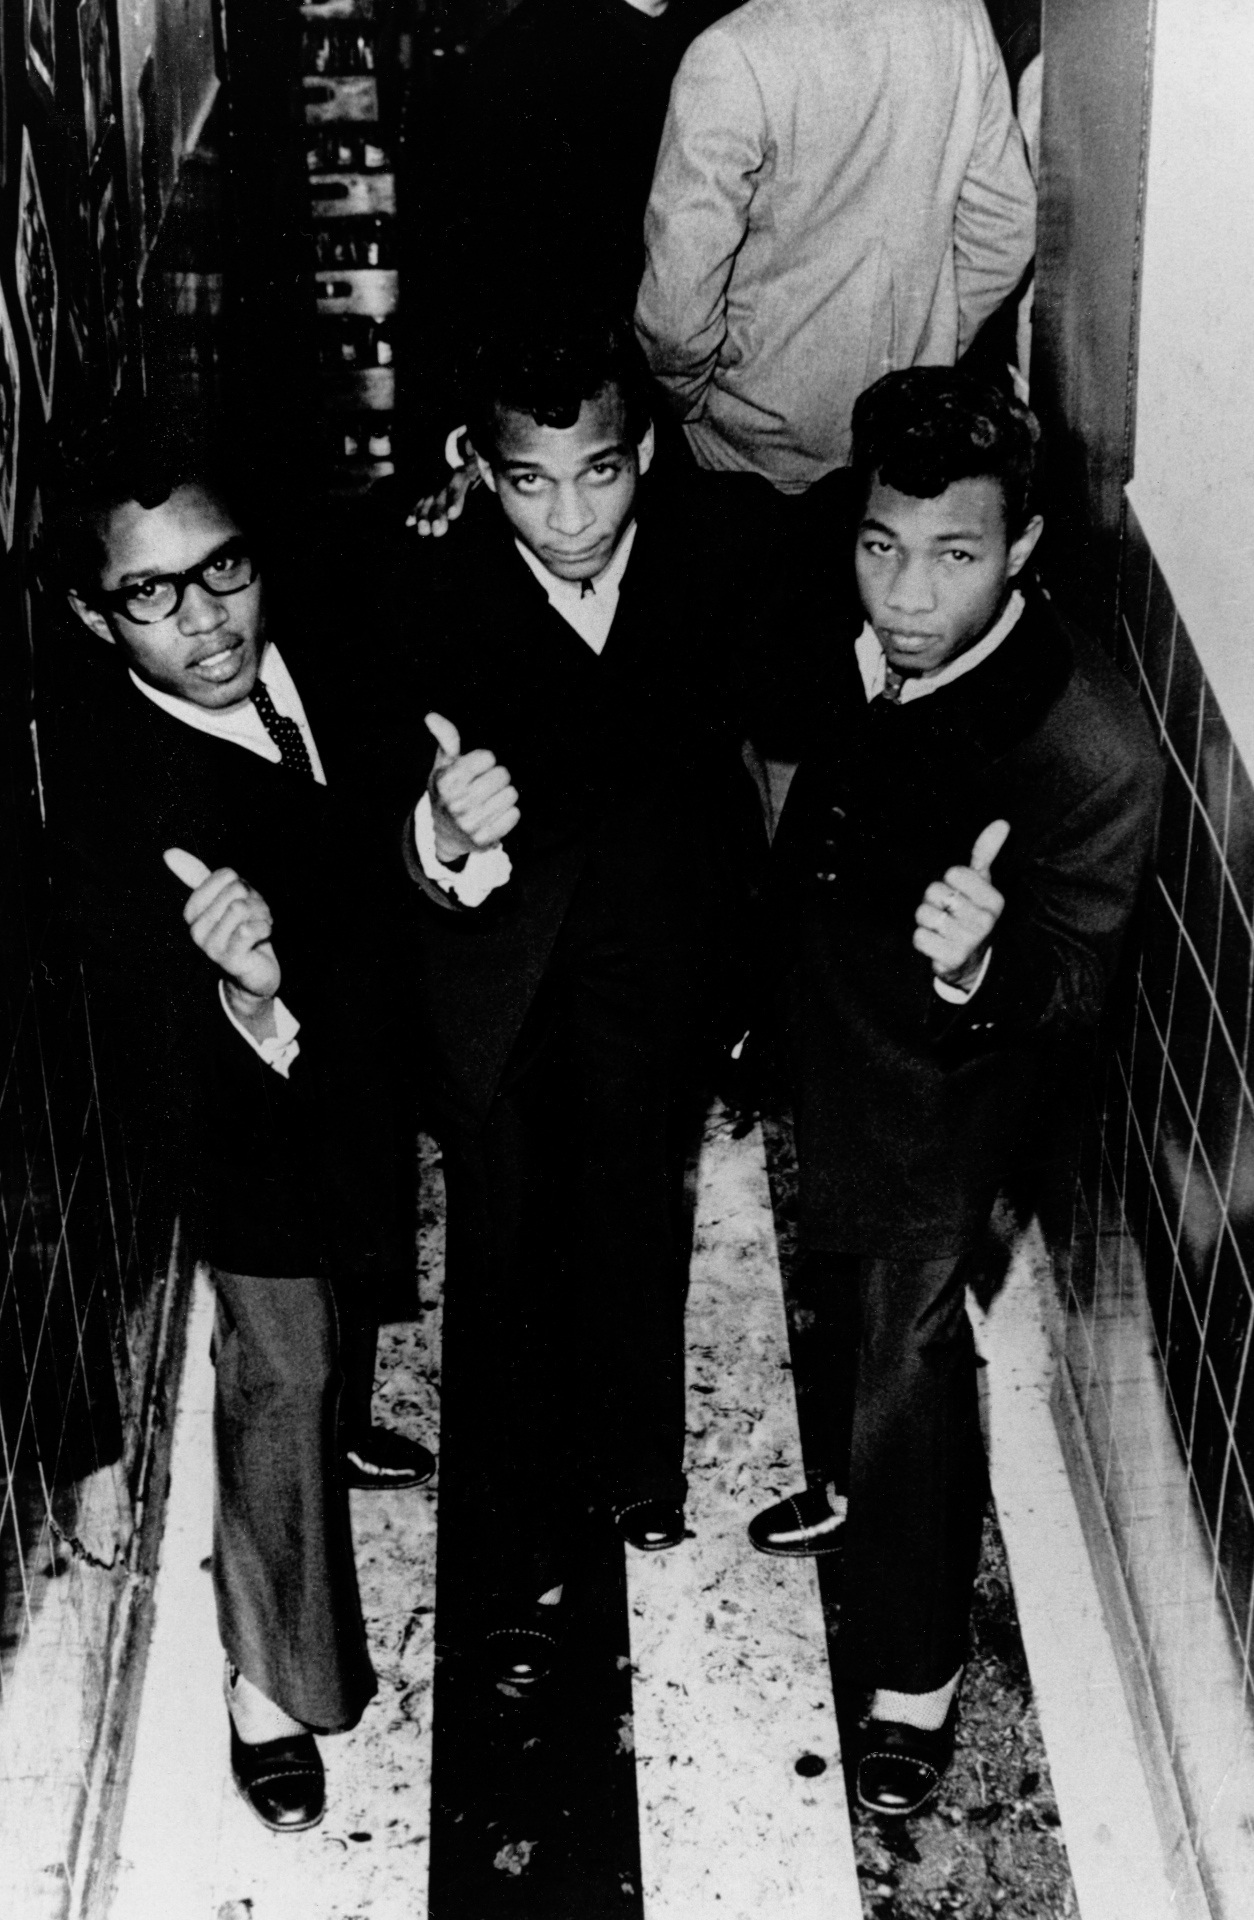 Cue Club regulars, 1966